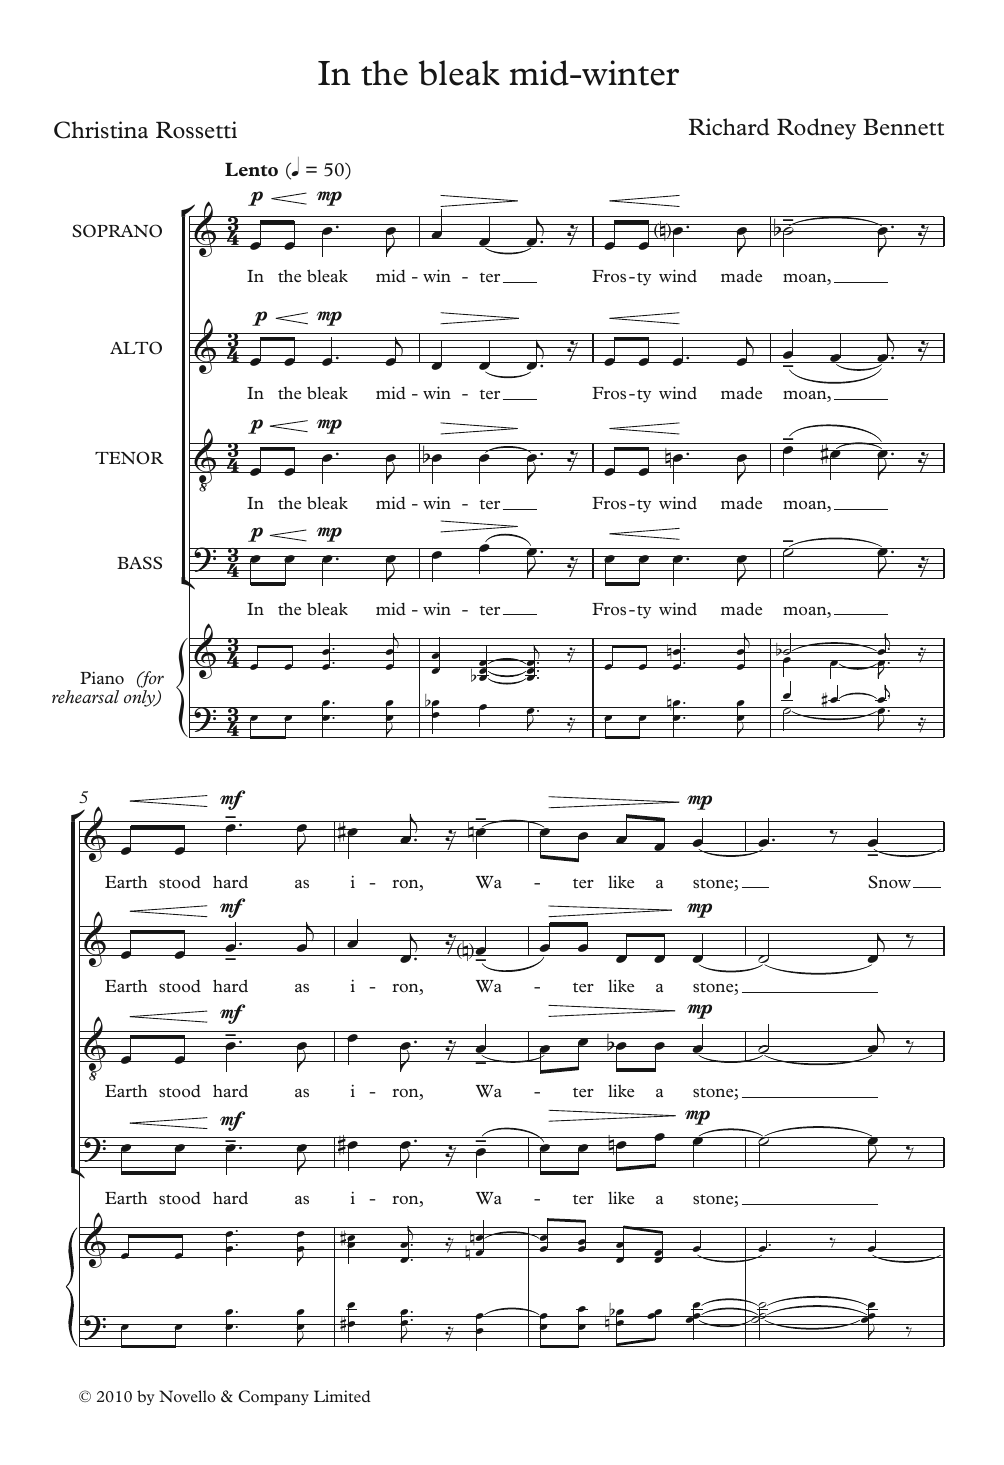 Richard Rodney Bennett In The Bleak Mid-Winter Sheet Music Notes & Chords for Choir - Download or Print PDF